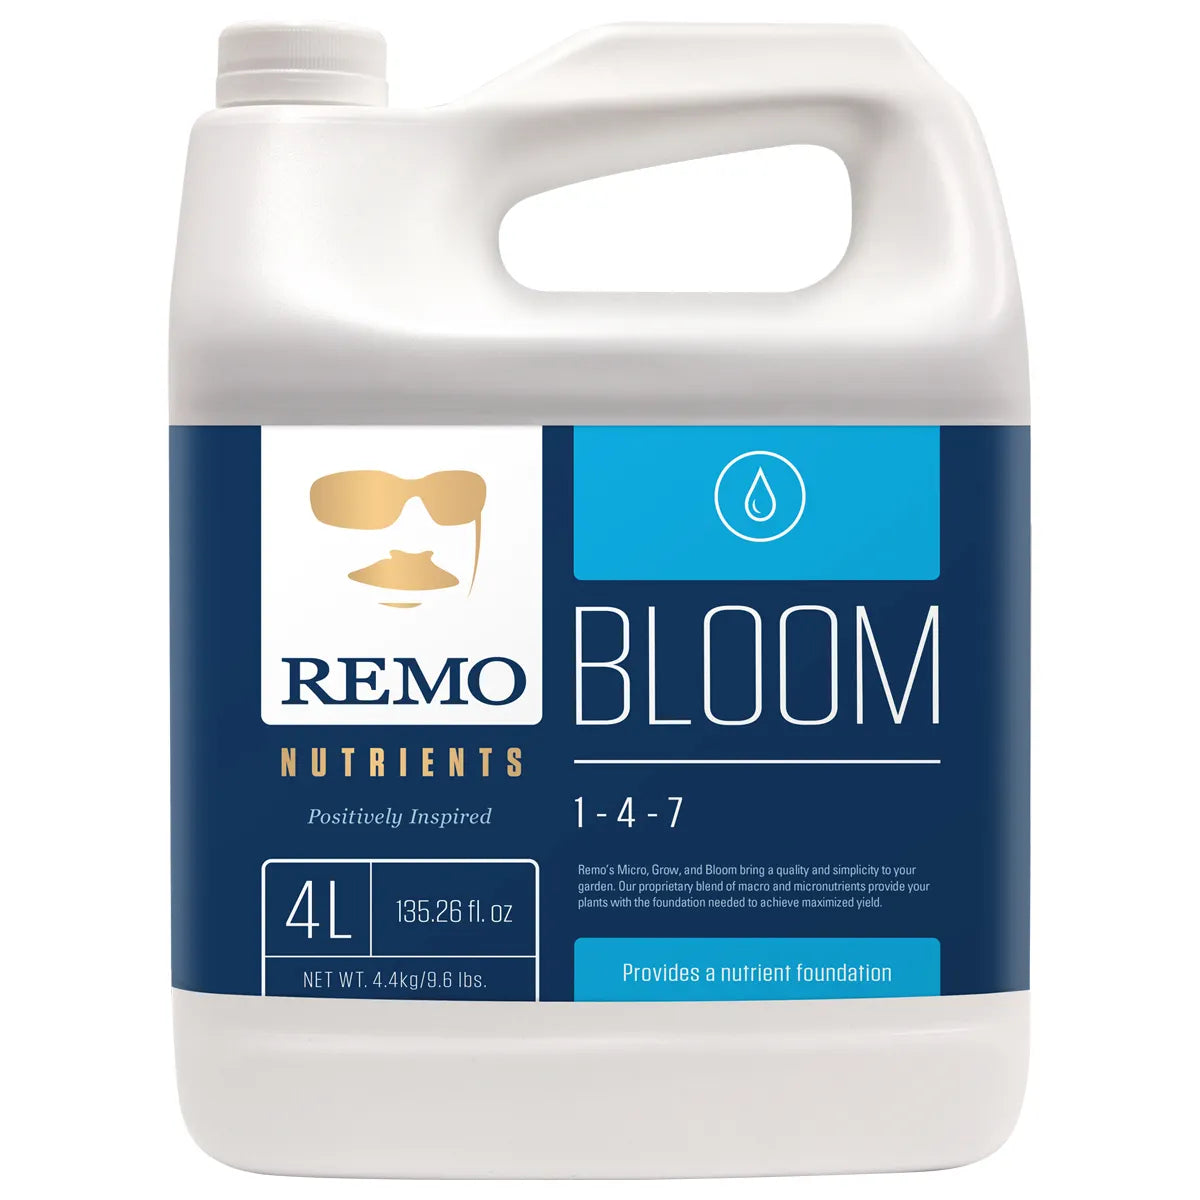 Remo's Nutrients - Bloom Nutrient